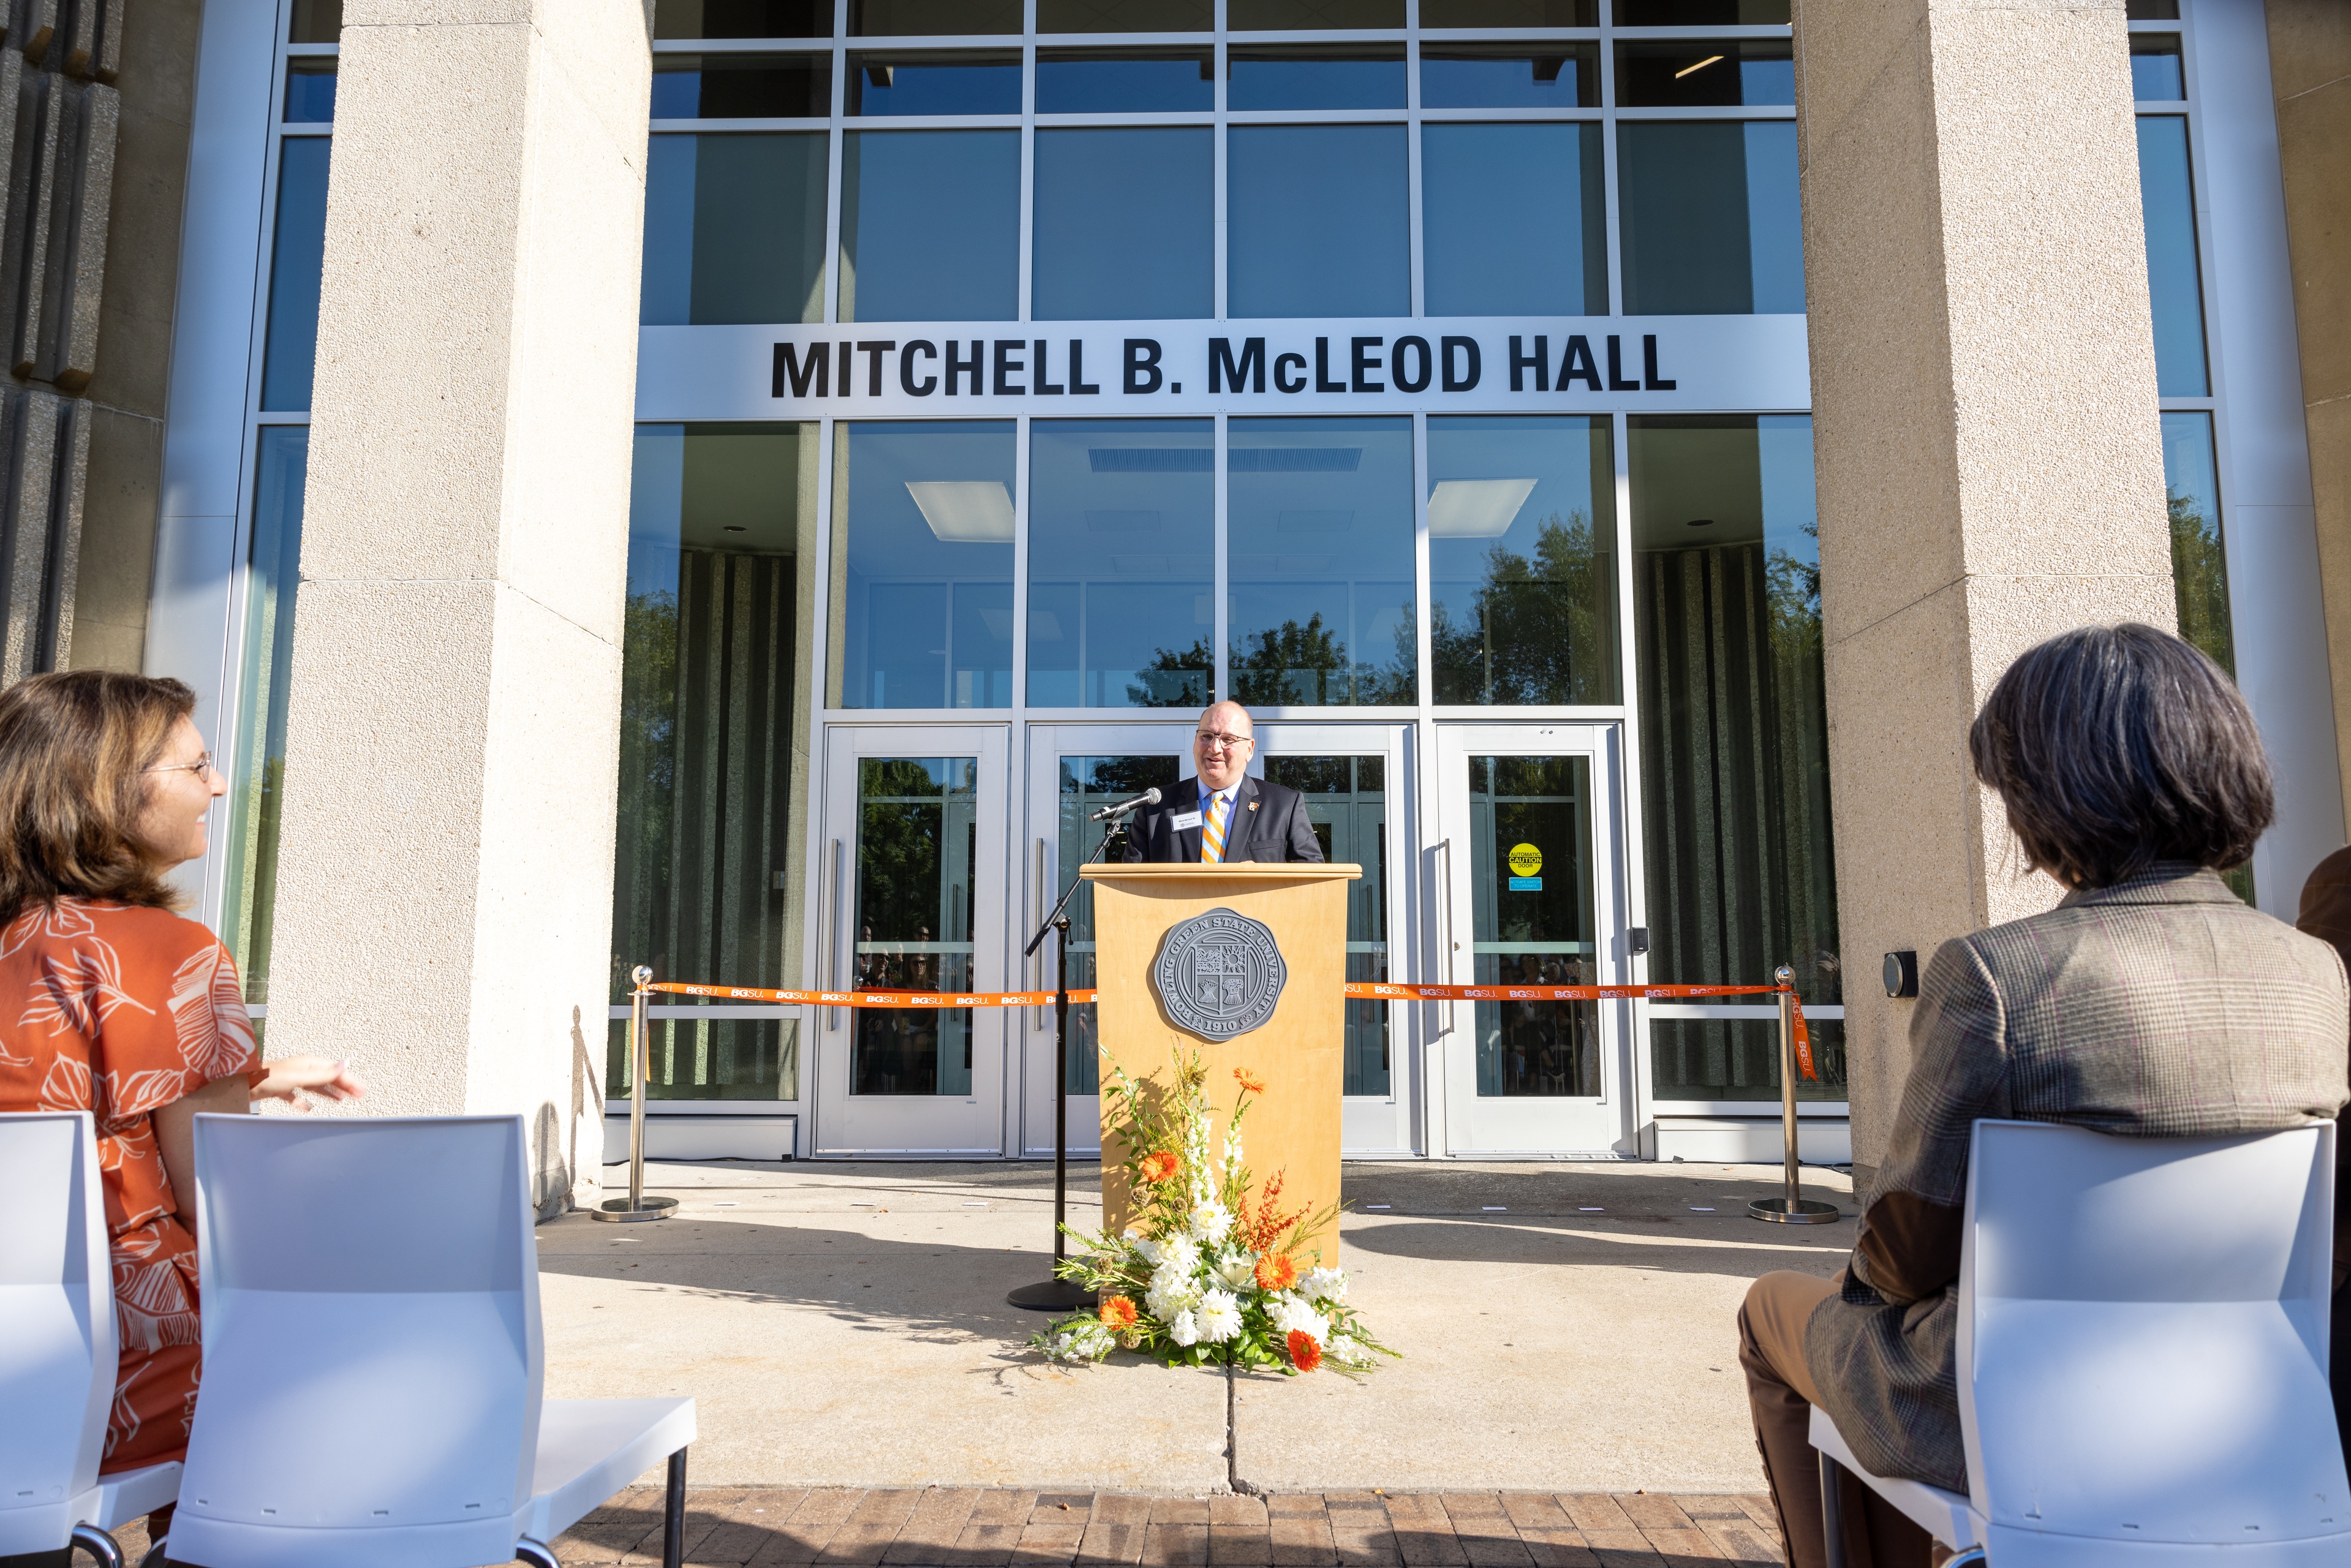 BGSU alumnus Mitchell B. McLeod speaks at a podium in front of McLeod Hall 